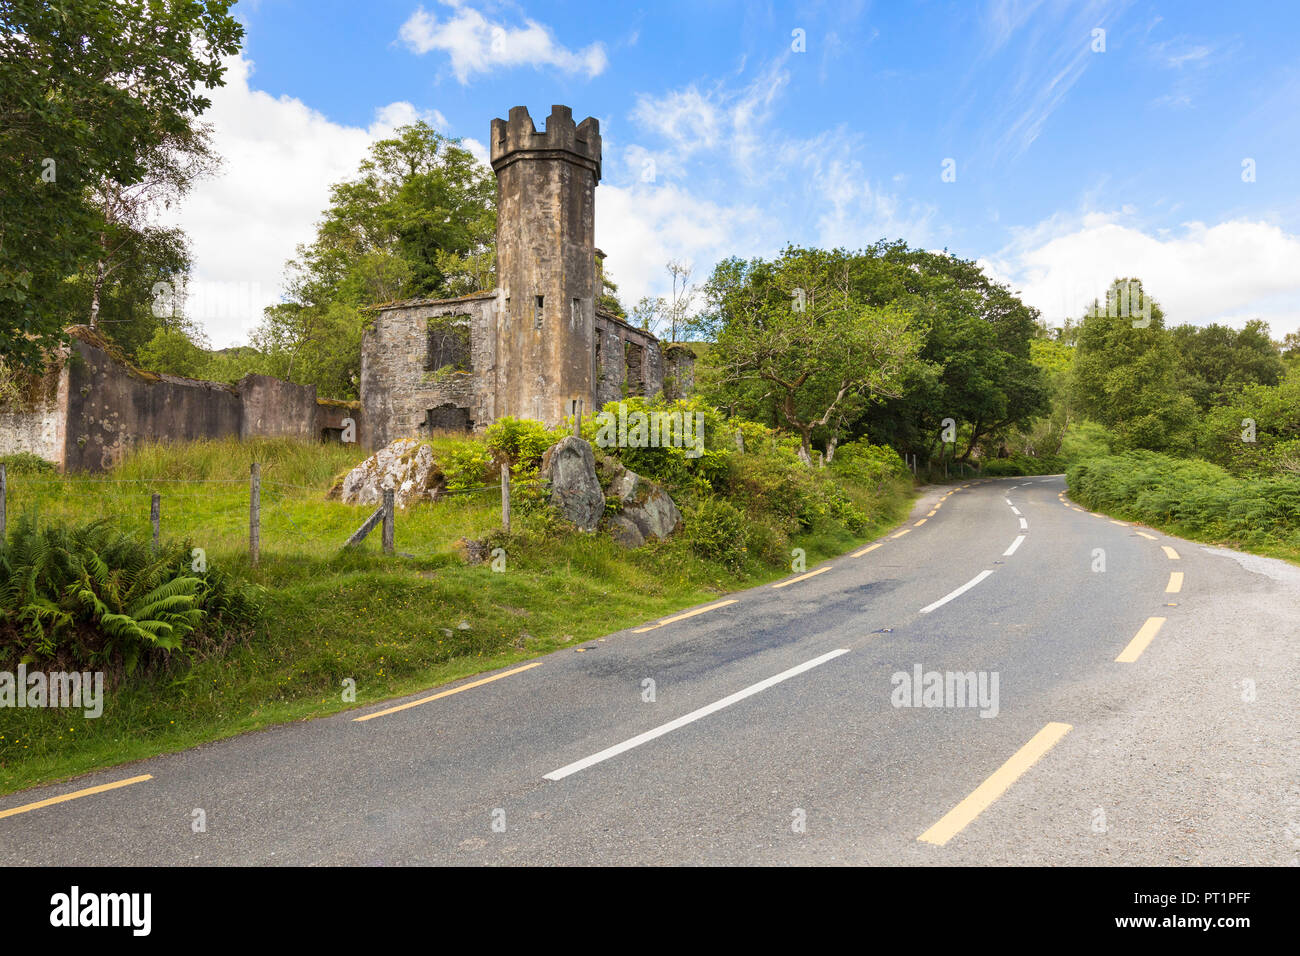 Alte Ruinen von Schloss, Nationalpark Killarney, County Kerry, Irland Stockfoto